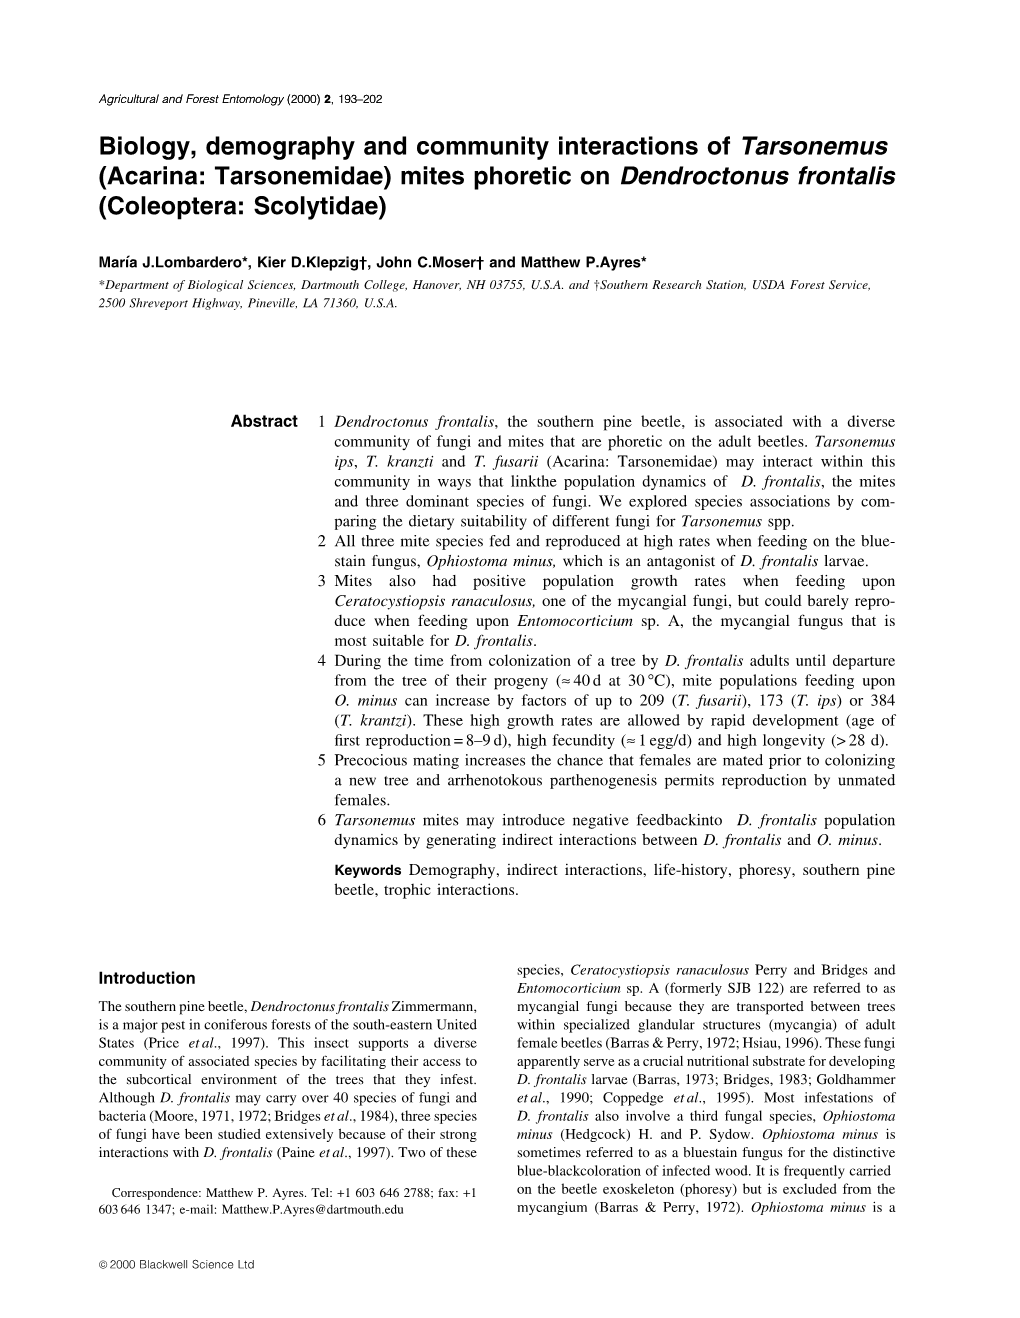 Biology, Demography and Community Interactions of Tarsonemus (Acarina: Tarsonemidae) Mites Phoretic on Dendroctonus Frontalis (Coleoptera: Scolytidae)